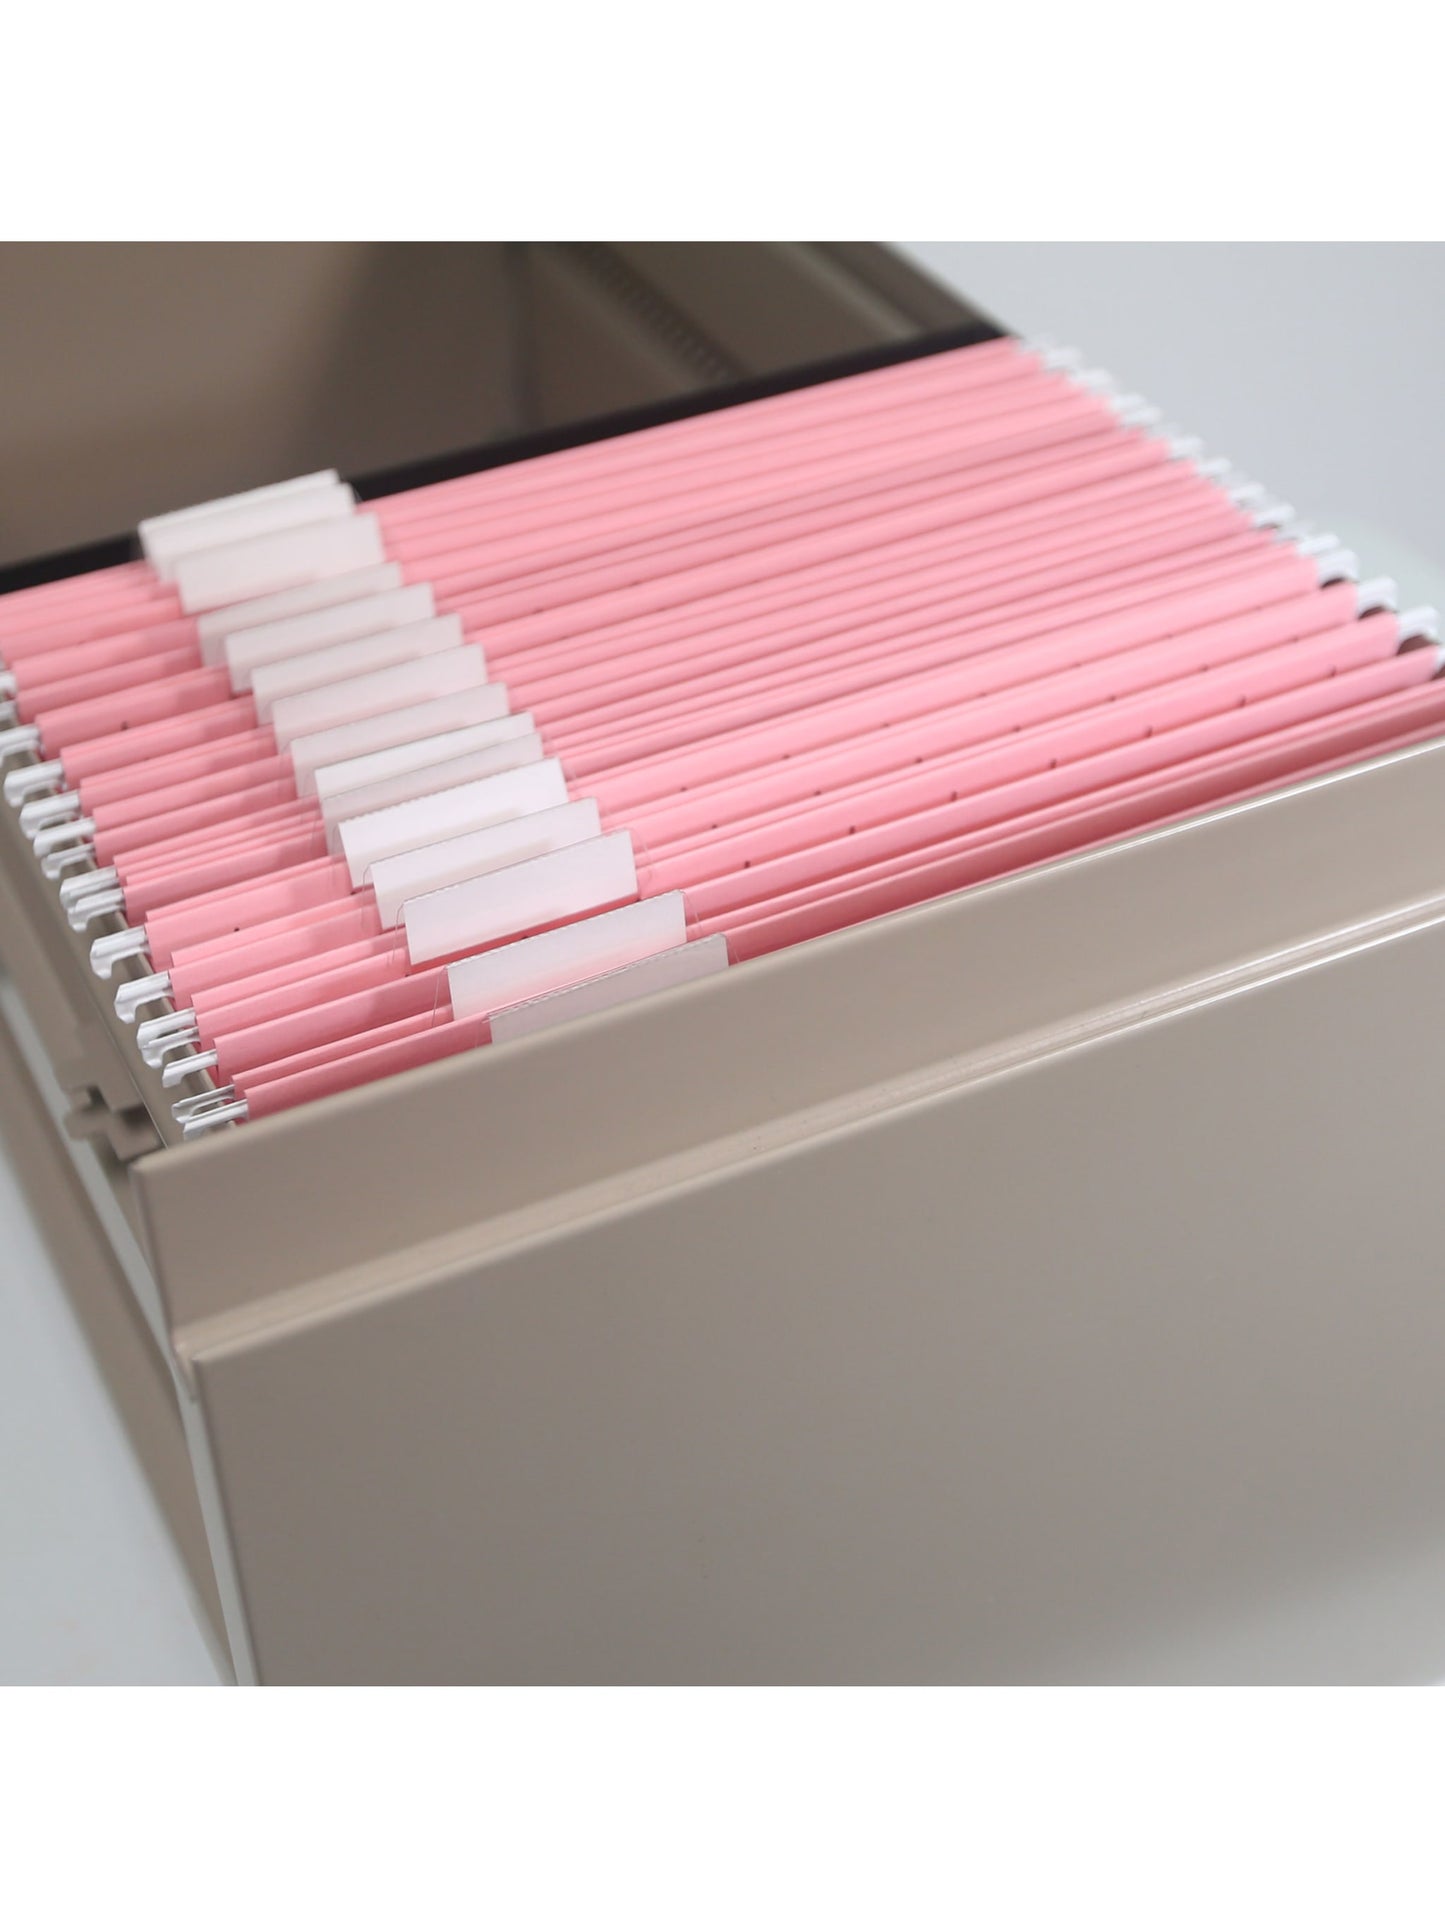 Standard Hanging File Folders with 1/5-Cut Tabs, Pink Color, Letter Size, Set of 25, 086486640664